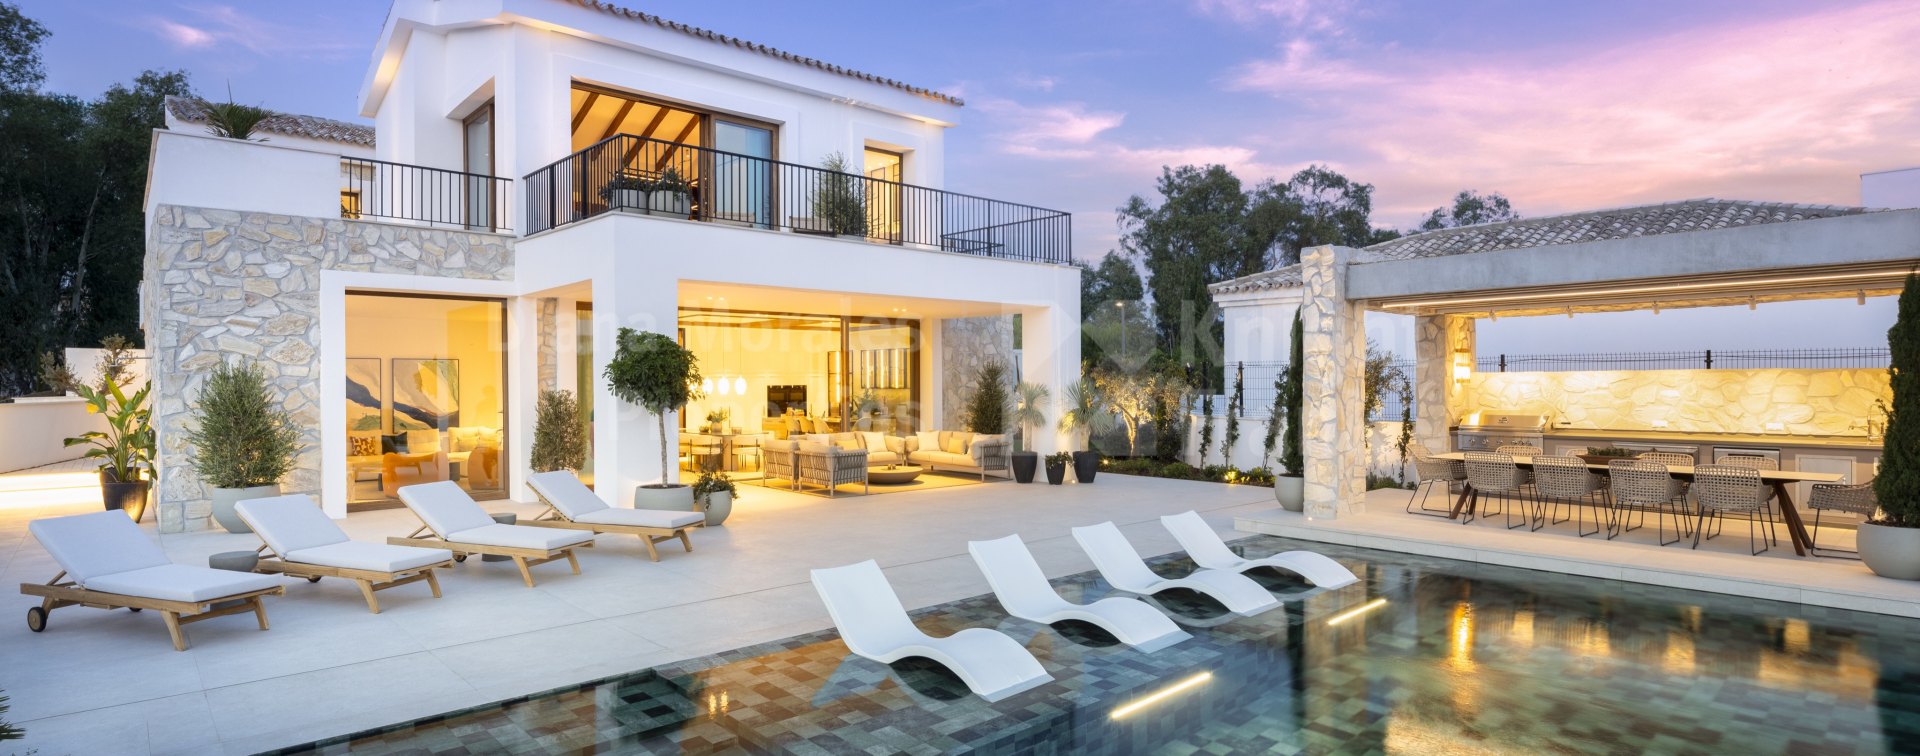 El Herrojo, Spanish Corner 16, exquisite Mediterranean style villa with panoramic views